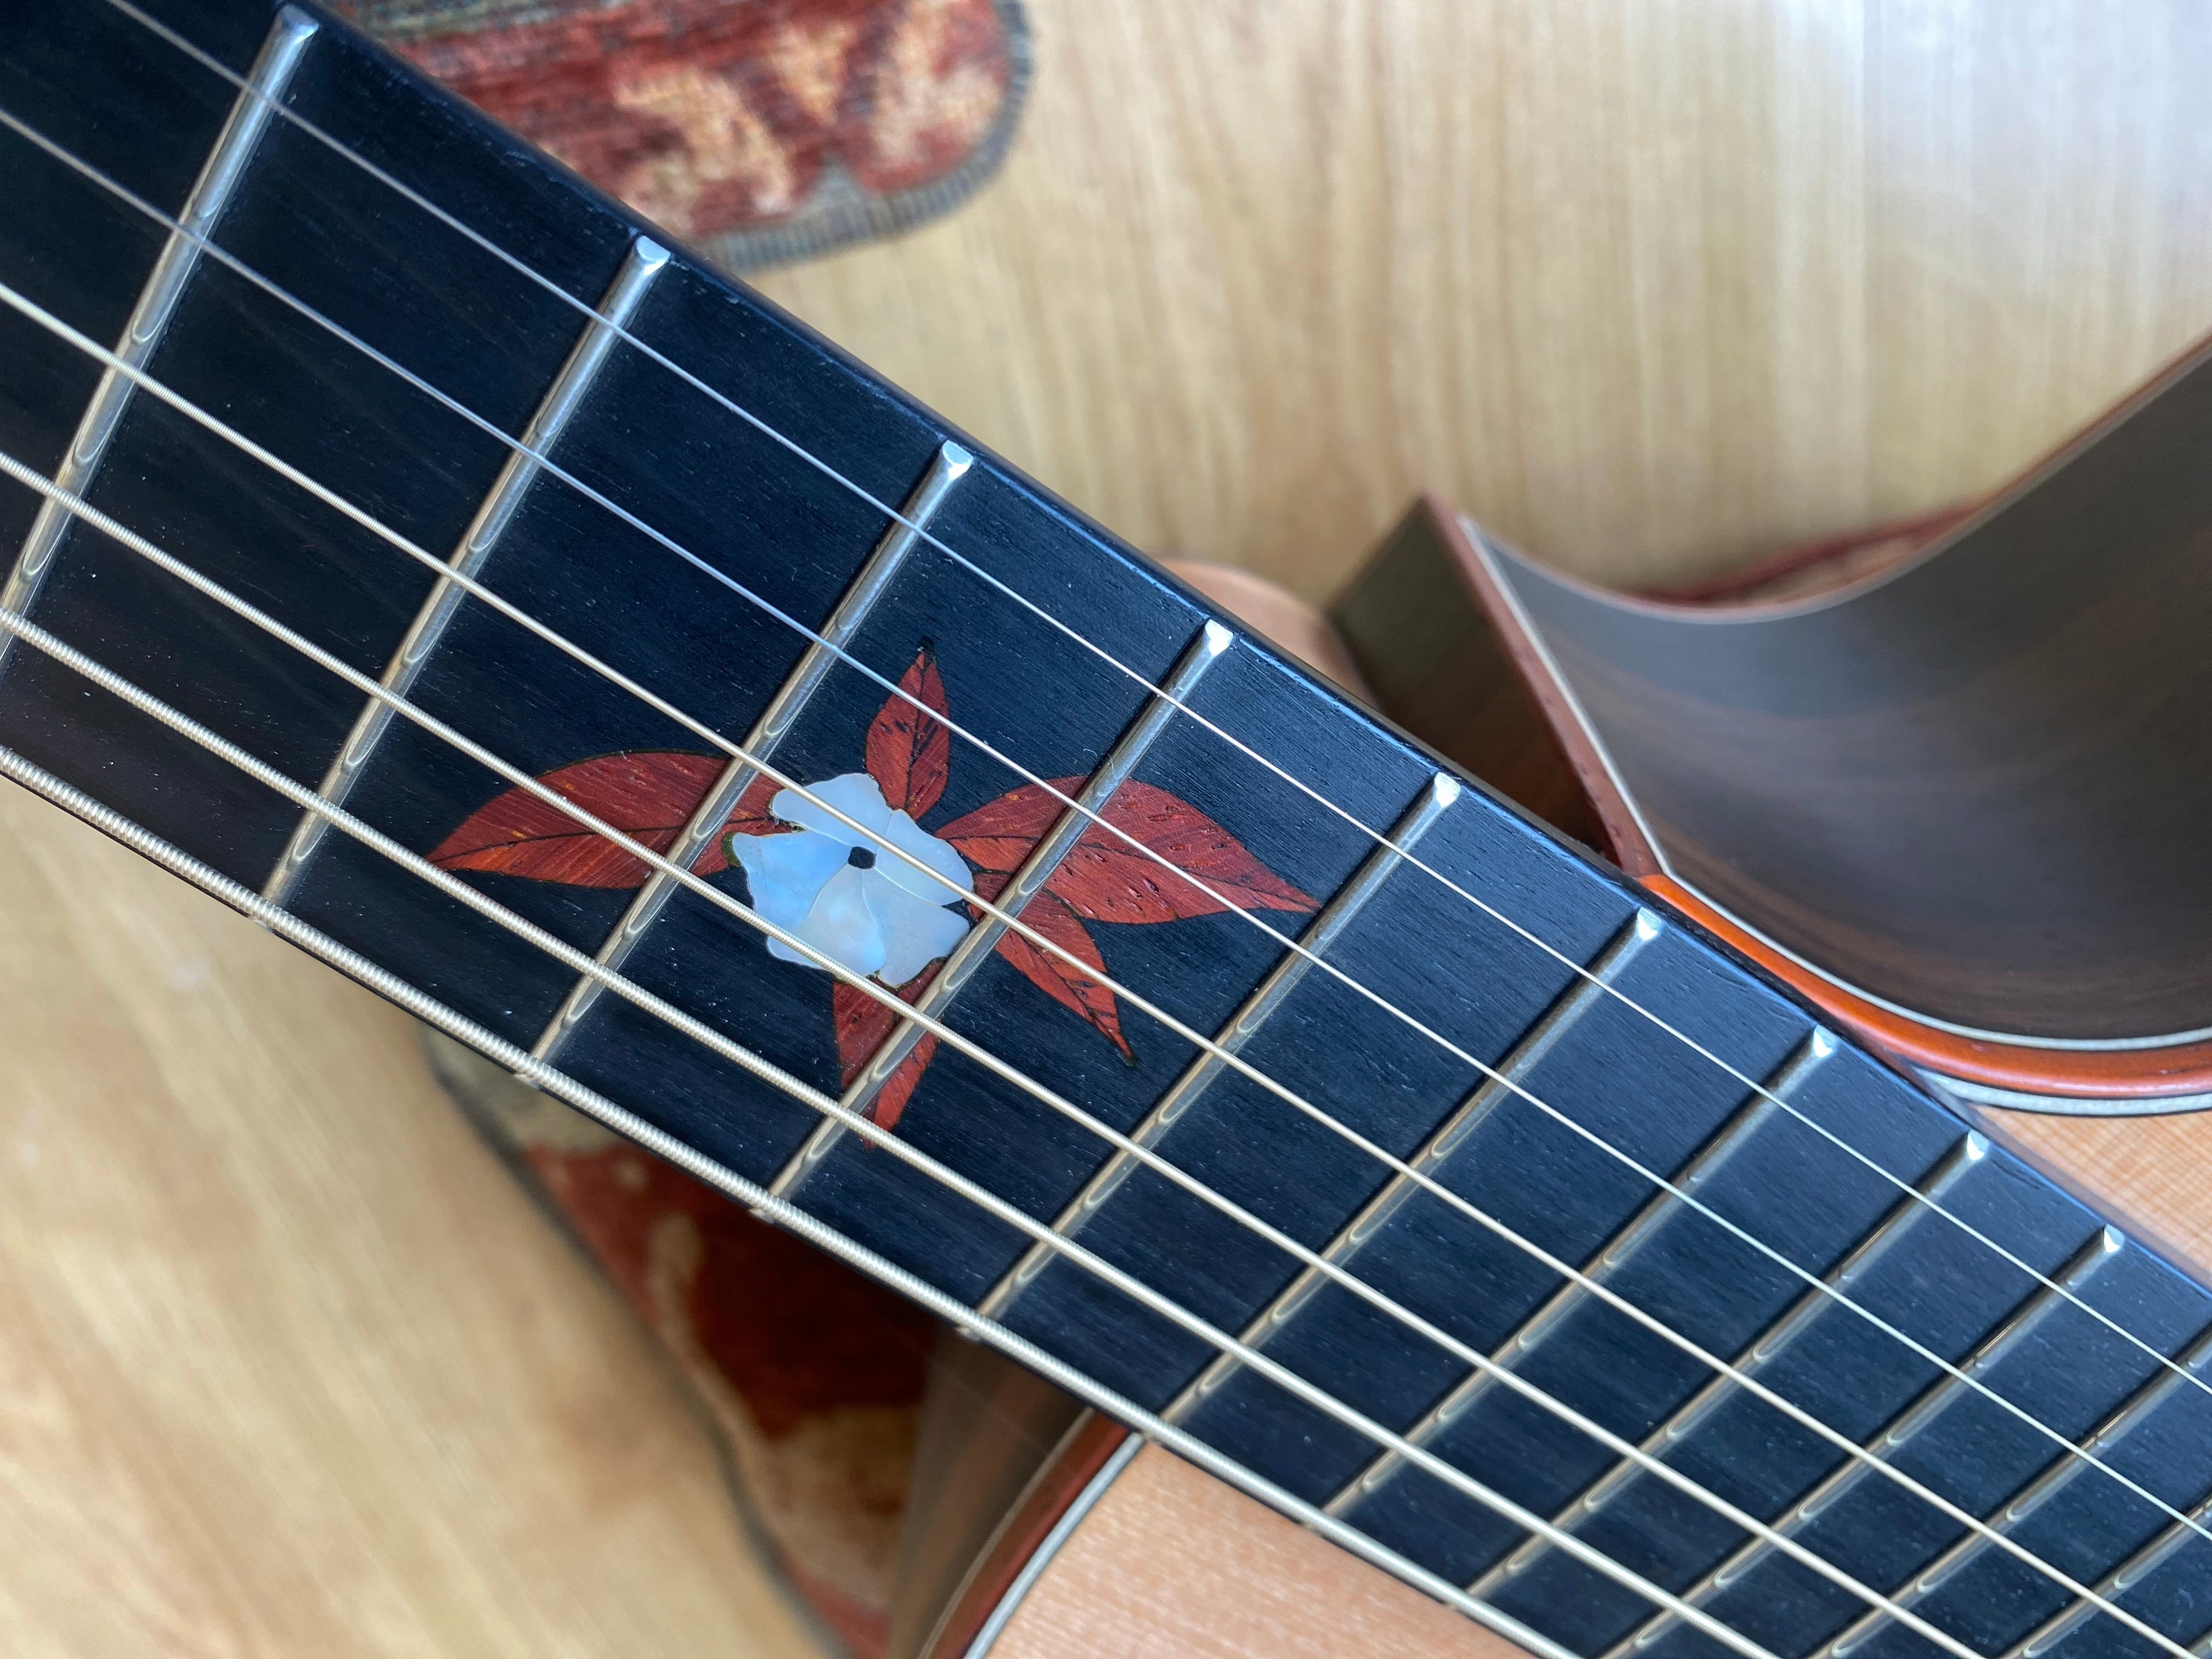 Dowina Figured Ebony GAC Master Build, Acoustic Guitar for sale at Richards Guitars.